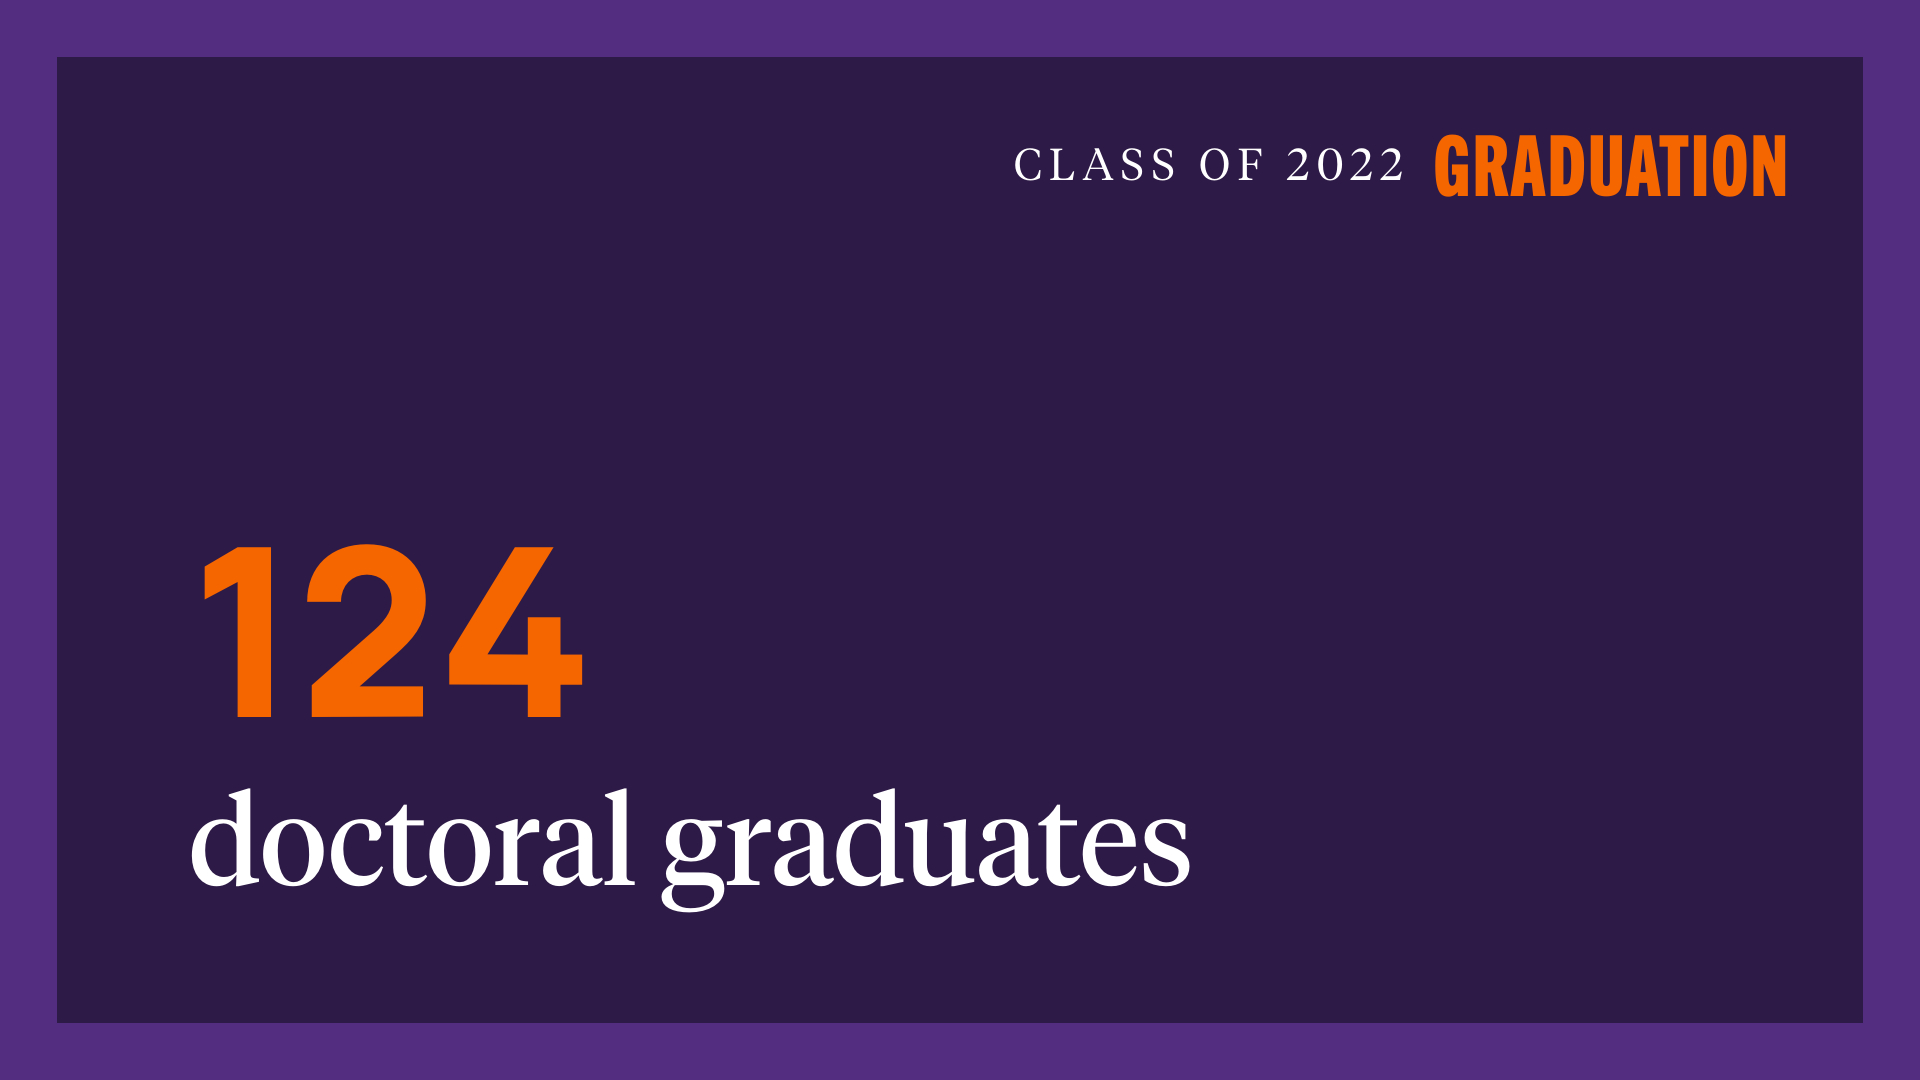 Class of 2022 Graduation: 124 doctoral graduates